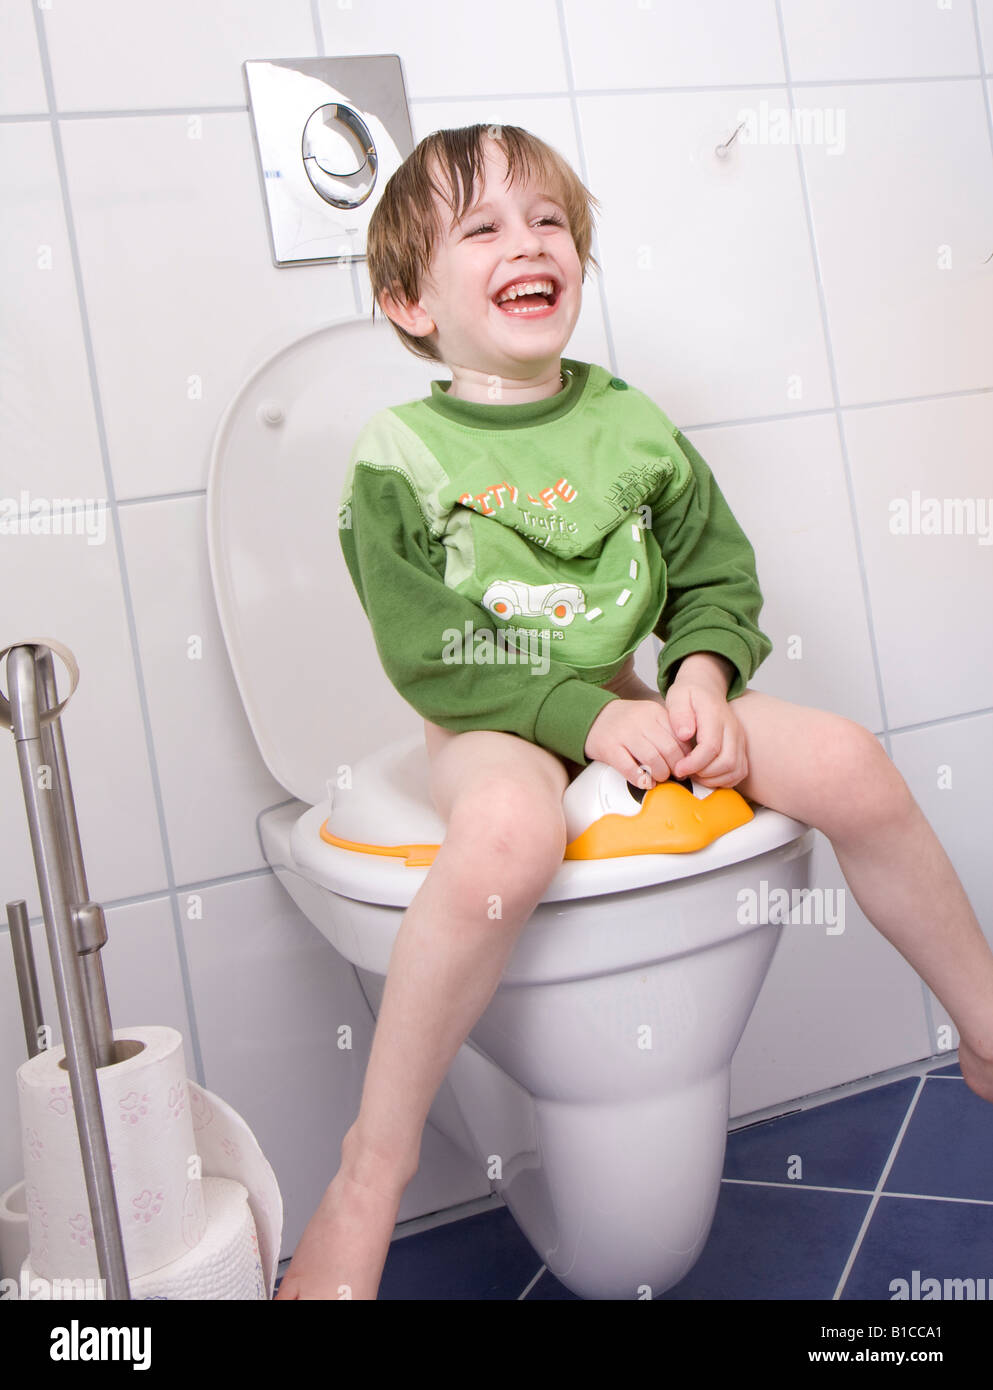 little boy sitting on the toilet Stock Photo